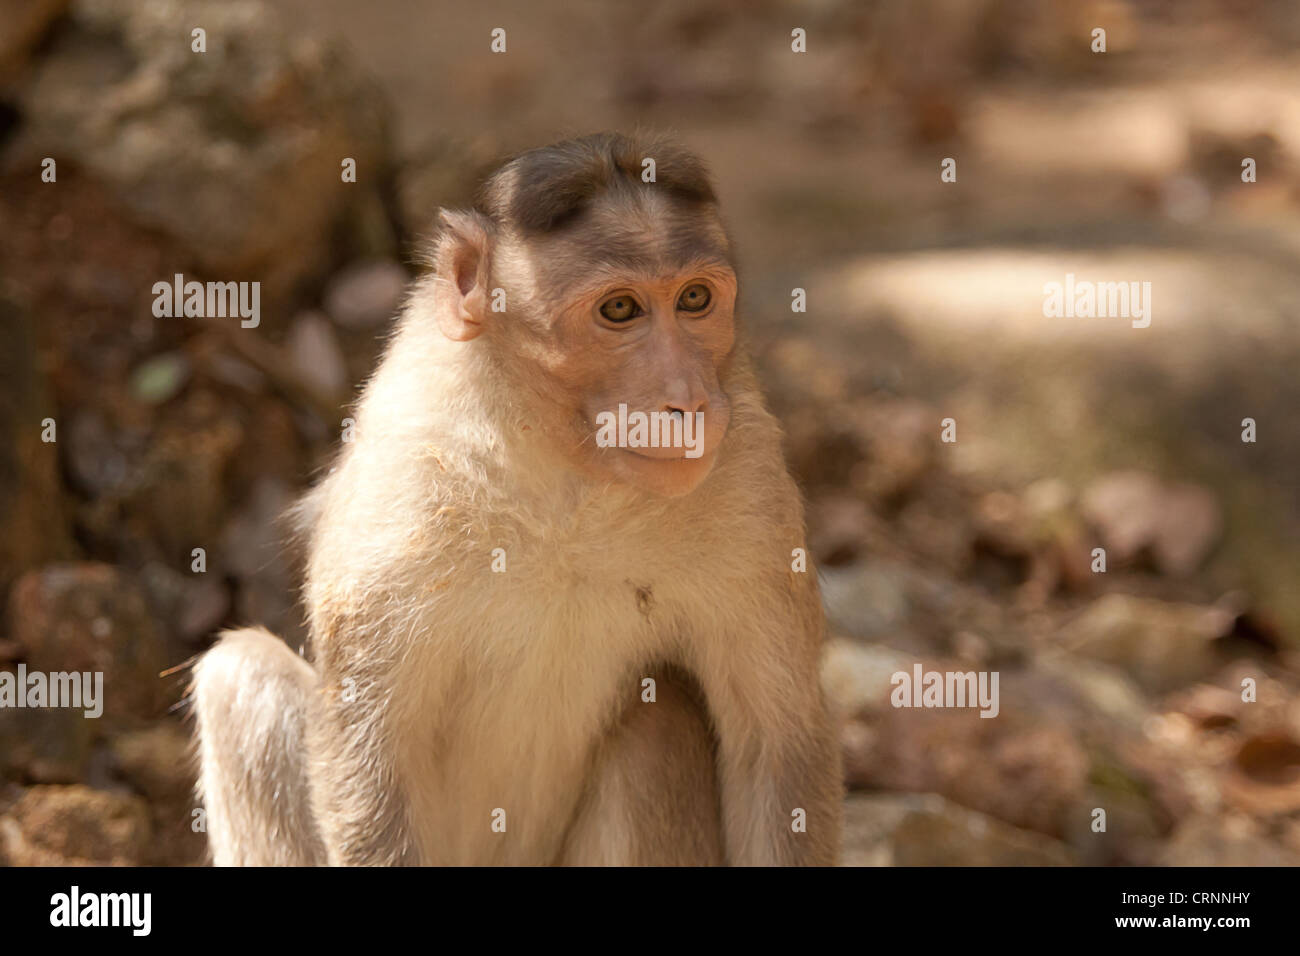 monkey sitting in shade Stock Photo